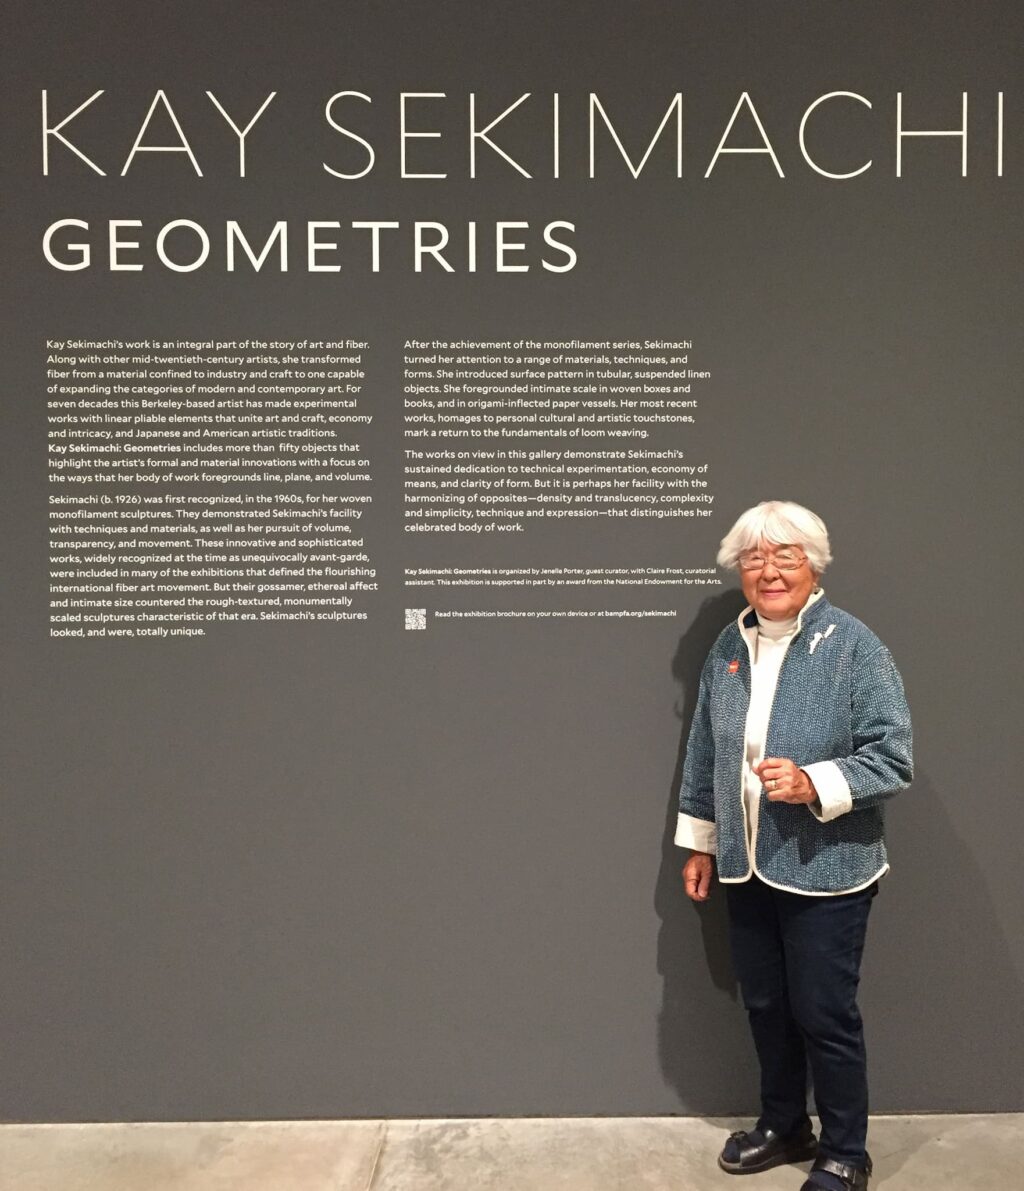 Kay Sekimachi at her Geometries exhibition